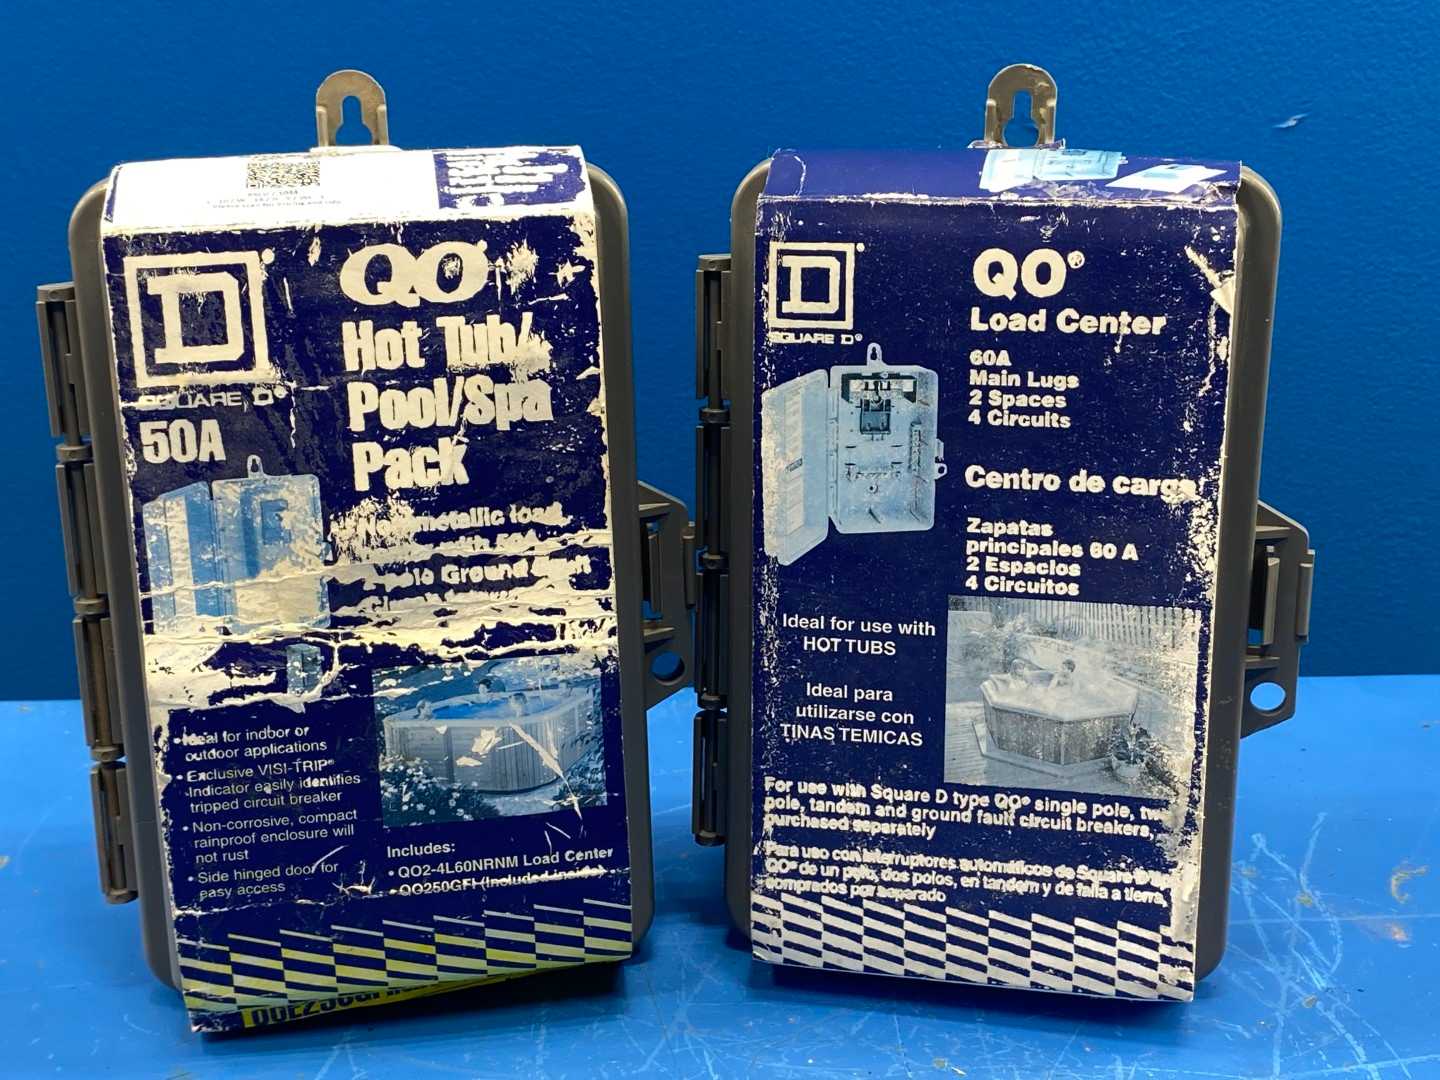 Square D QOE250GFINM HOT TUB Double Pack Non Metallic Enclosures